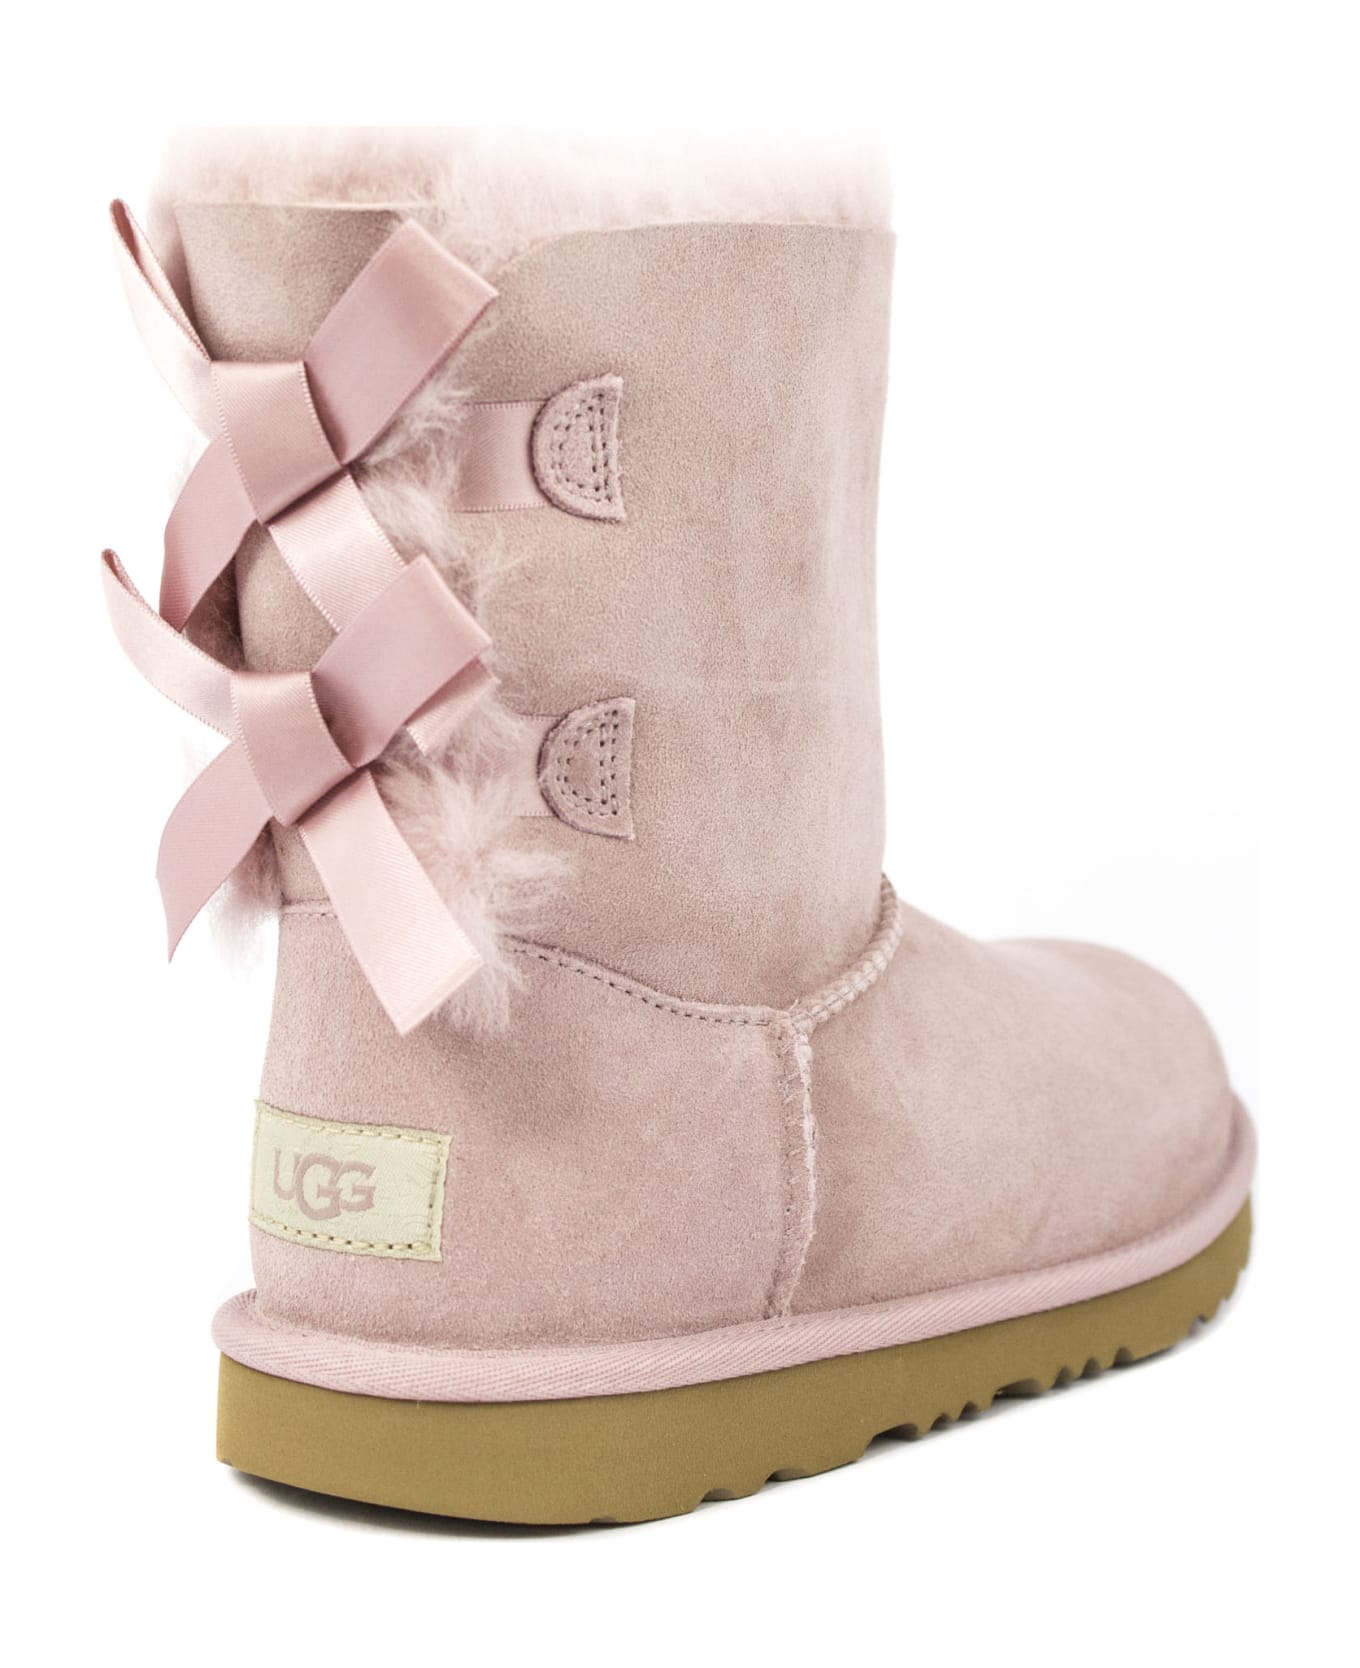 UGG Boots In Pink Sheepskin | italist